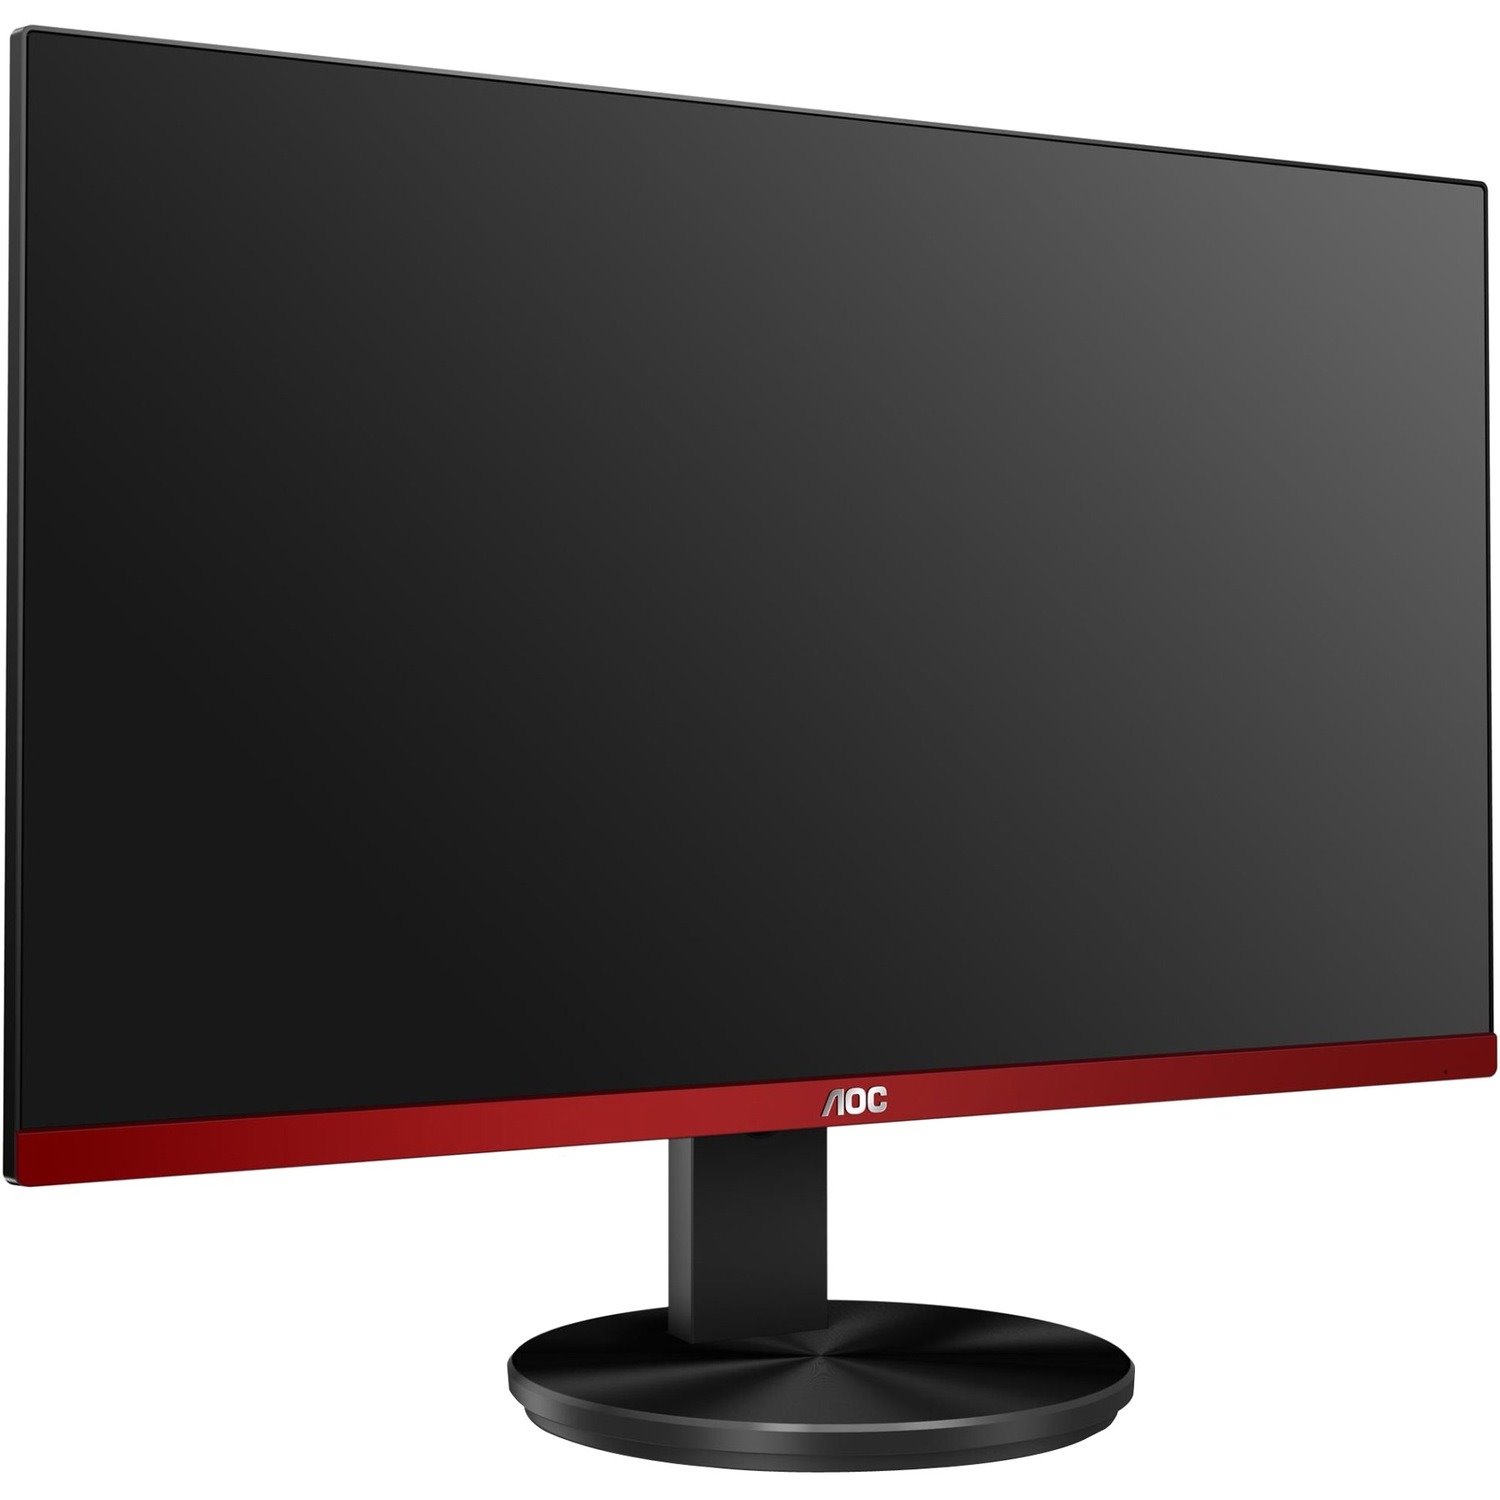 AOC G2590FX 24.5" Full HD WLED LCD Monitor - 16:9